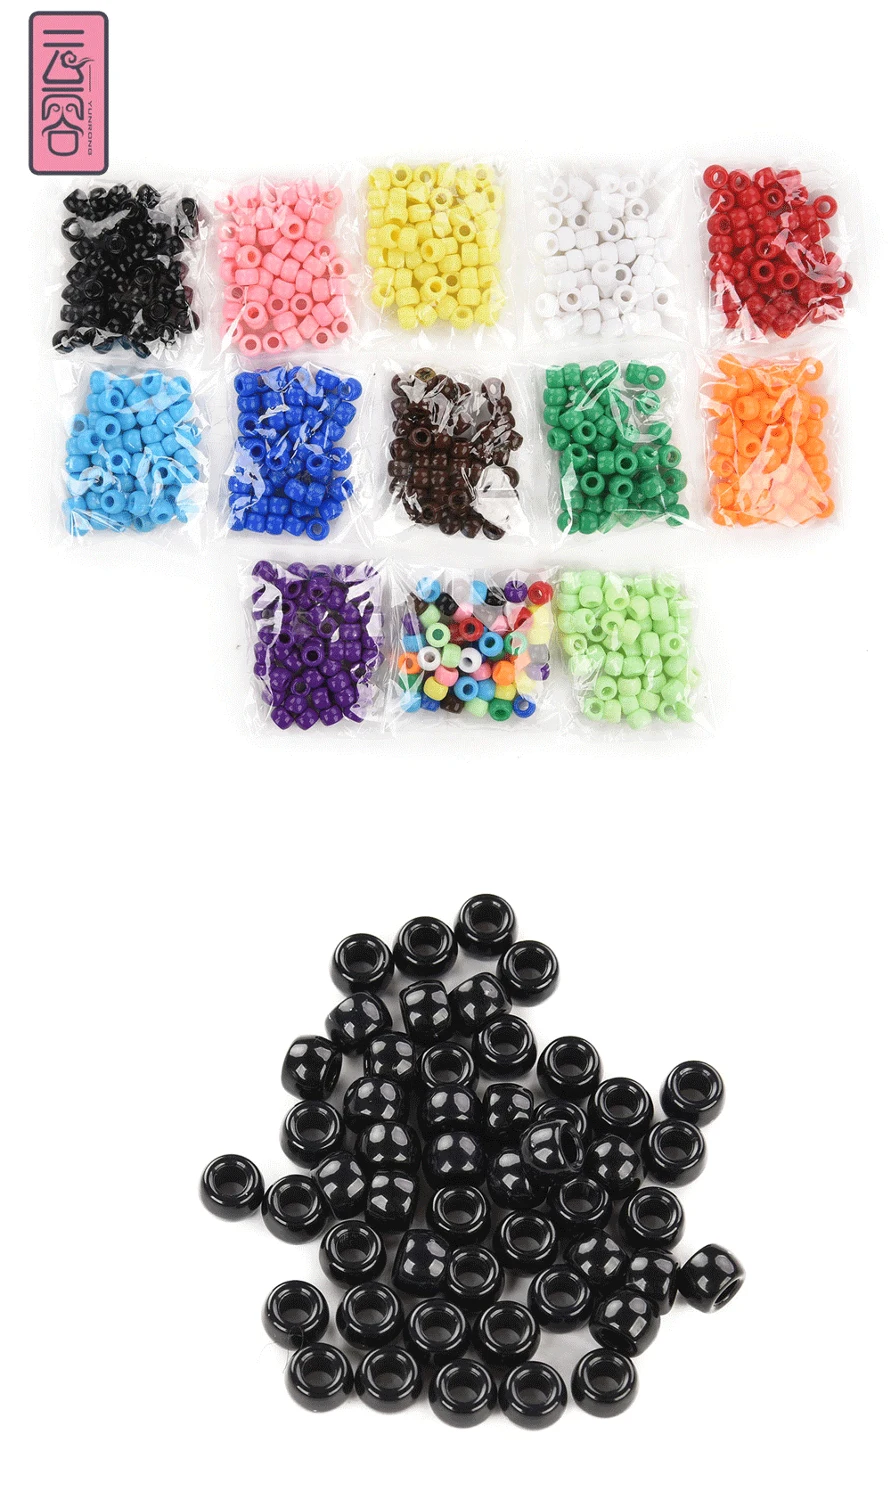 

7mm 1000pcs Crochet Braids Acrylic Round hair braid dreadlock Beads ringsTube Rings Beads Links Human Hair Extensions tools